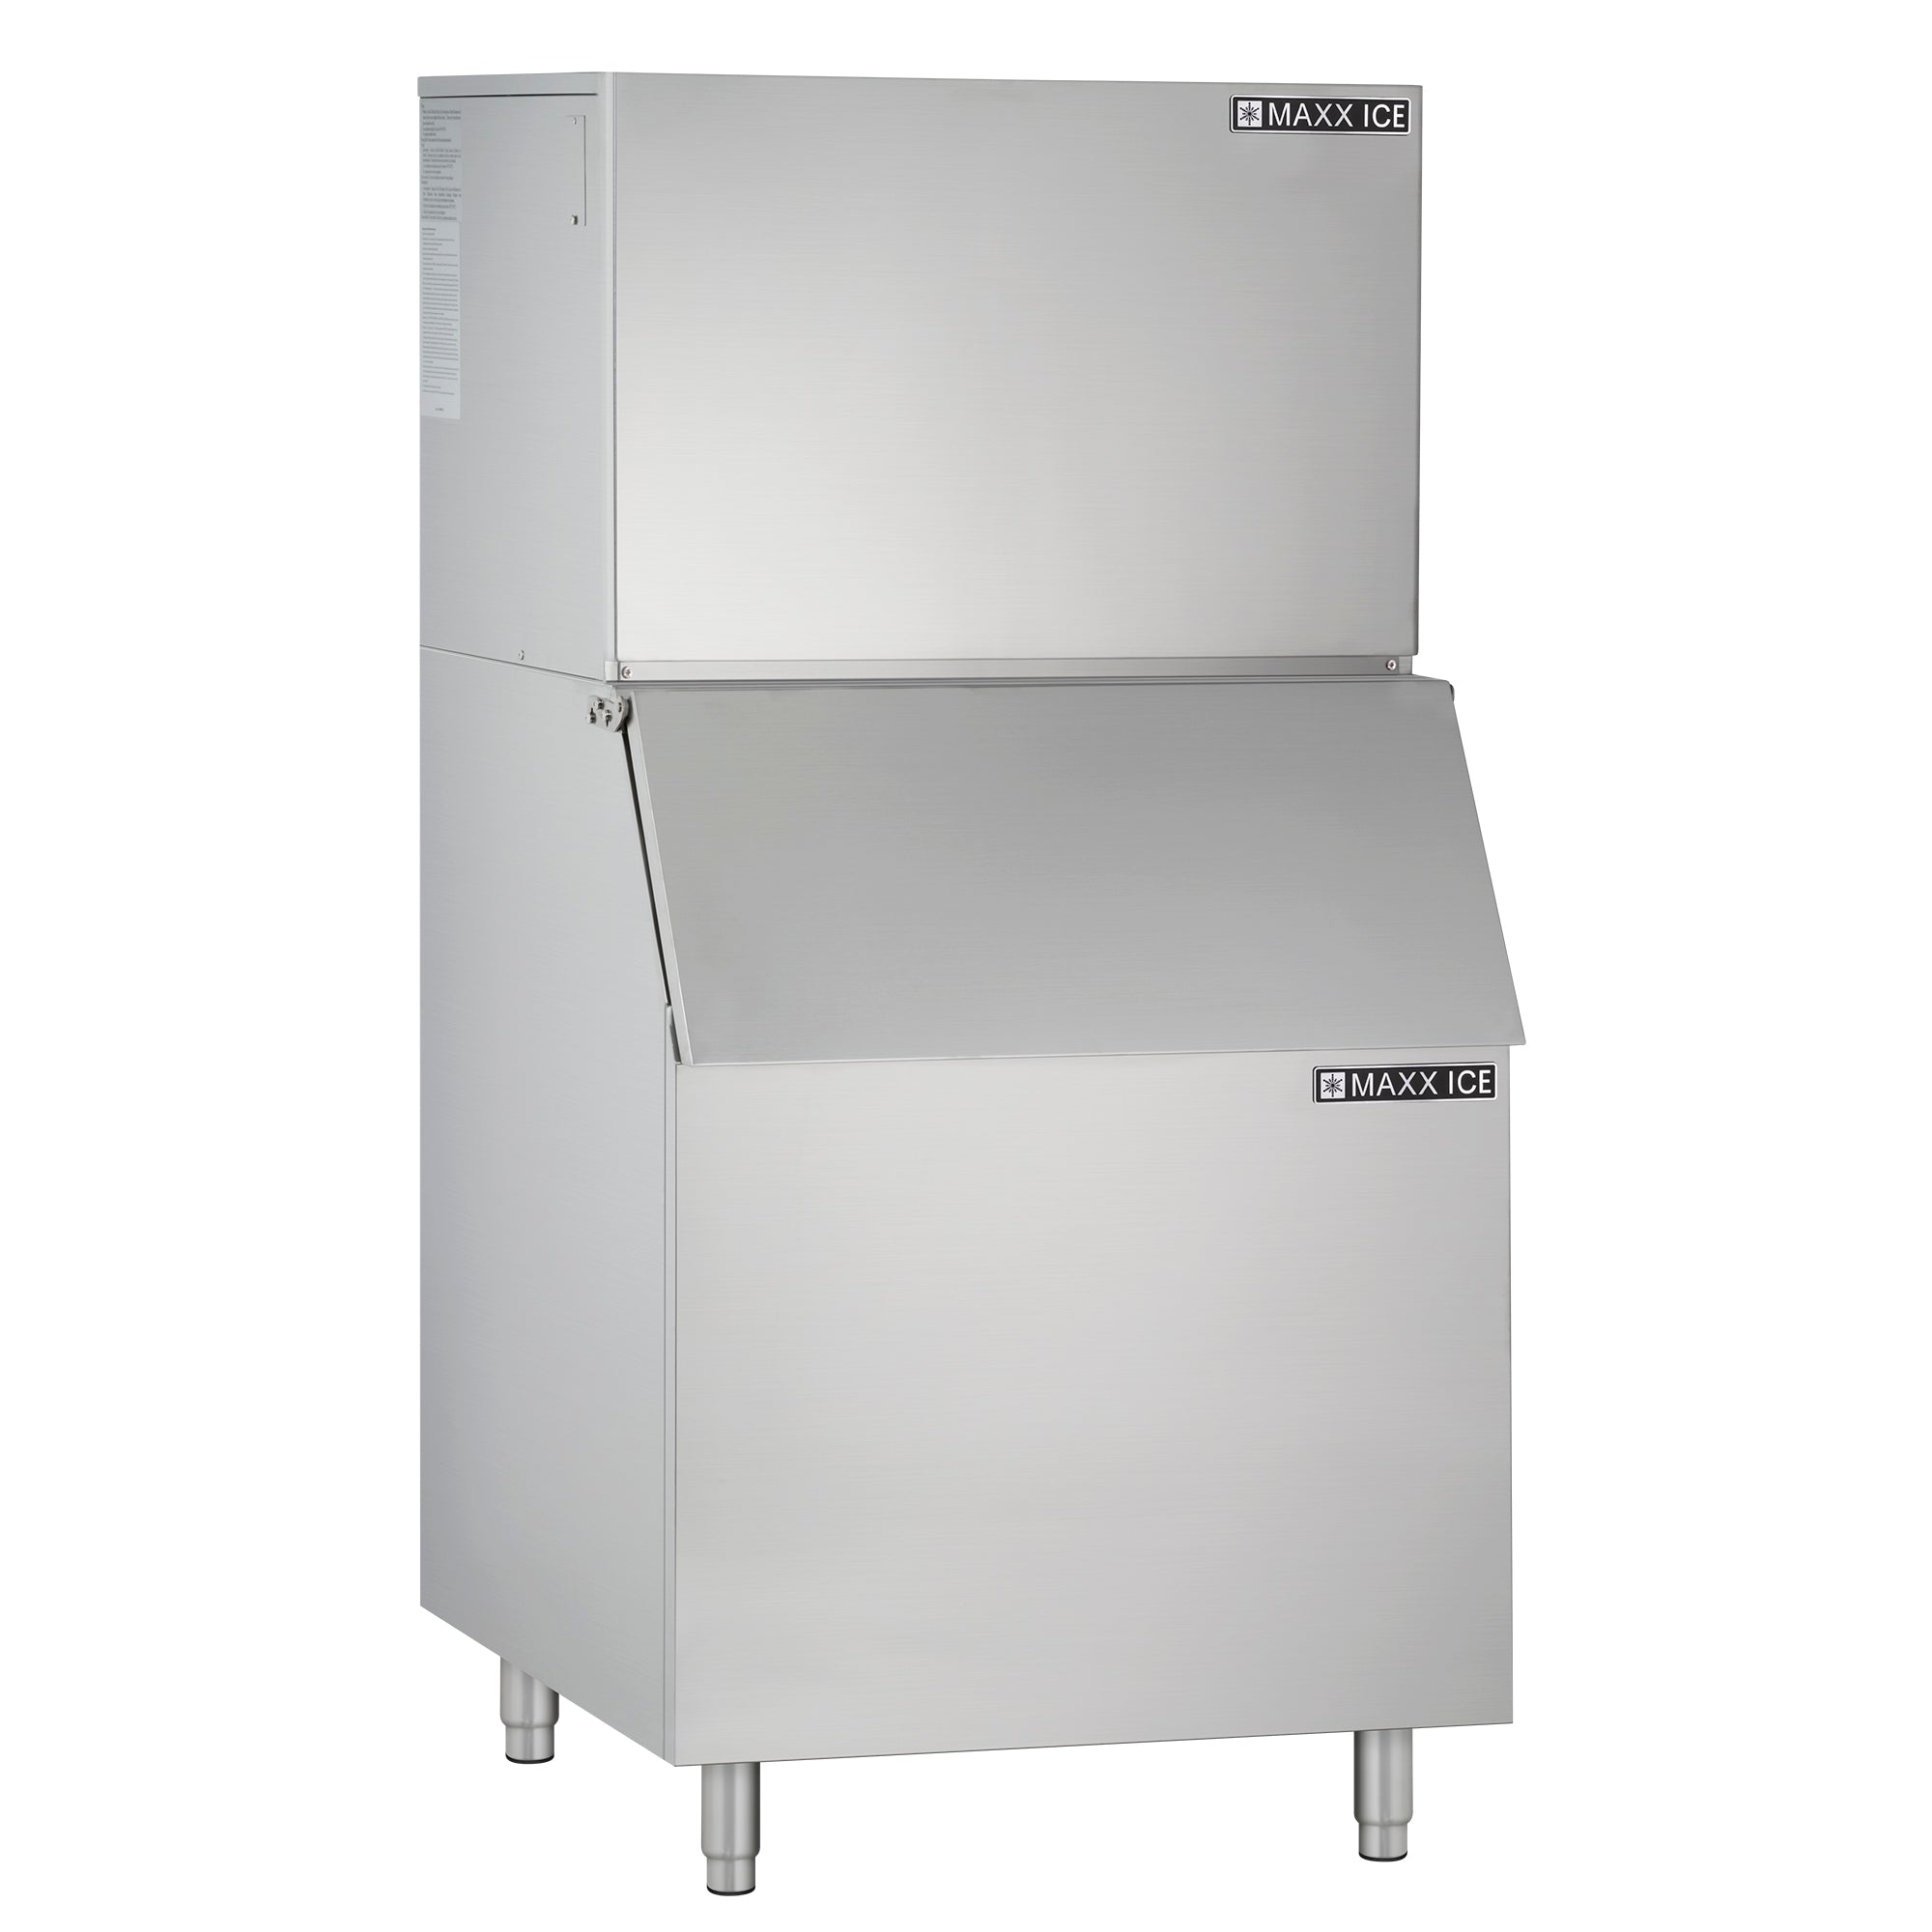 Maxx Ice - MIM452B, Maxx Ice Modular Ice Machine, 30"W, 460 lbs, Full Dice Ice Cubes, and Storage Bin, 30"W, 400 lbs, in Stainless Steel